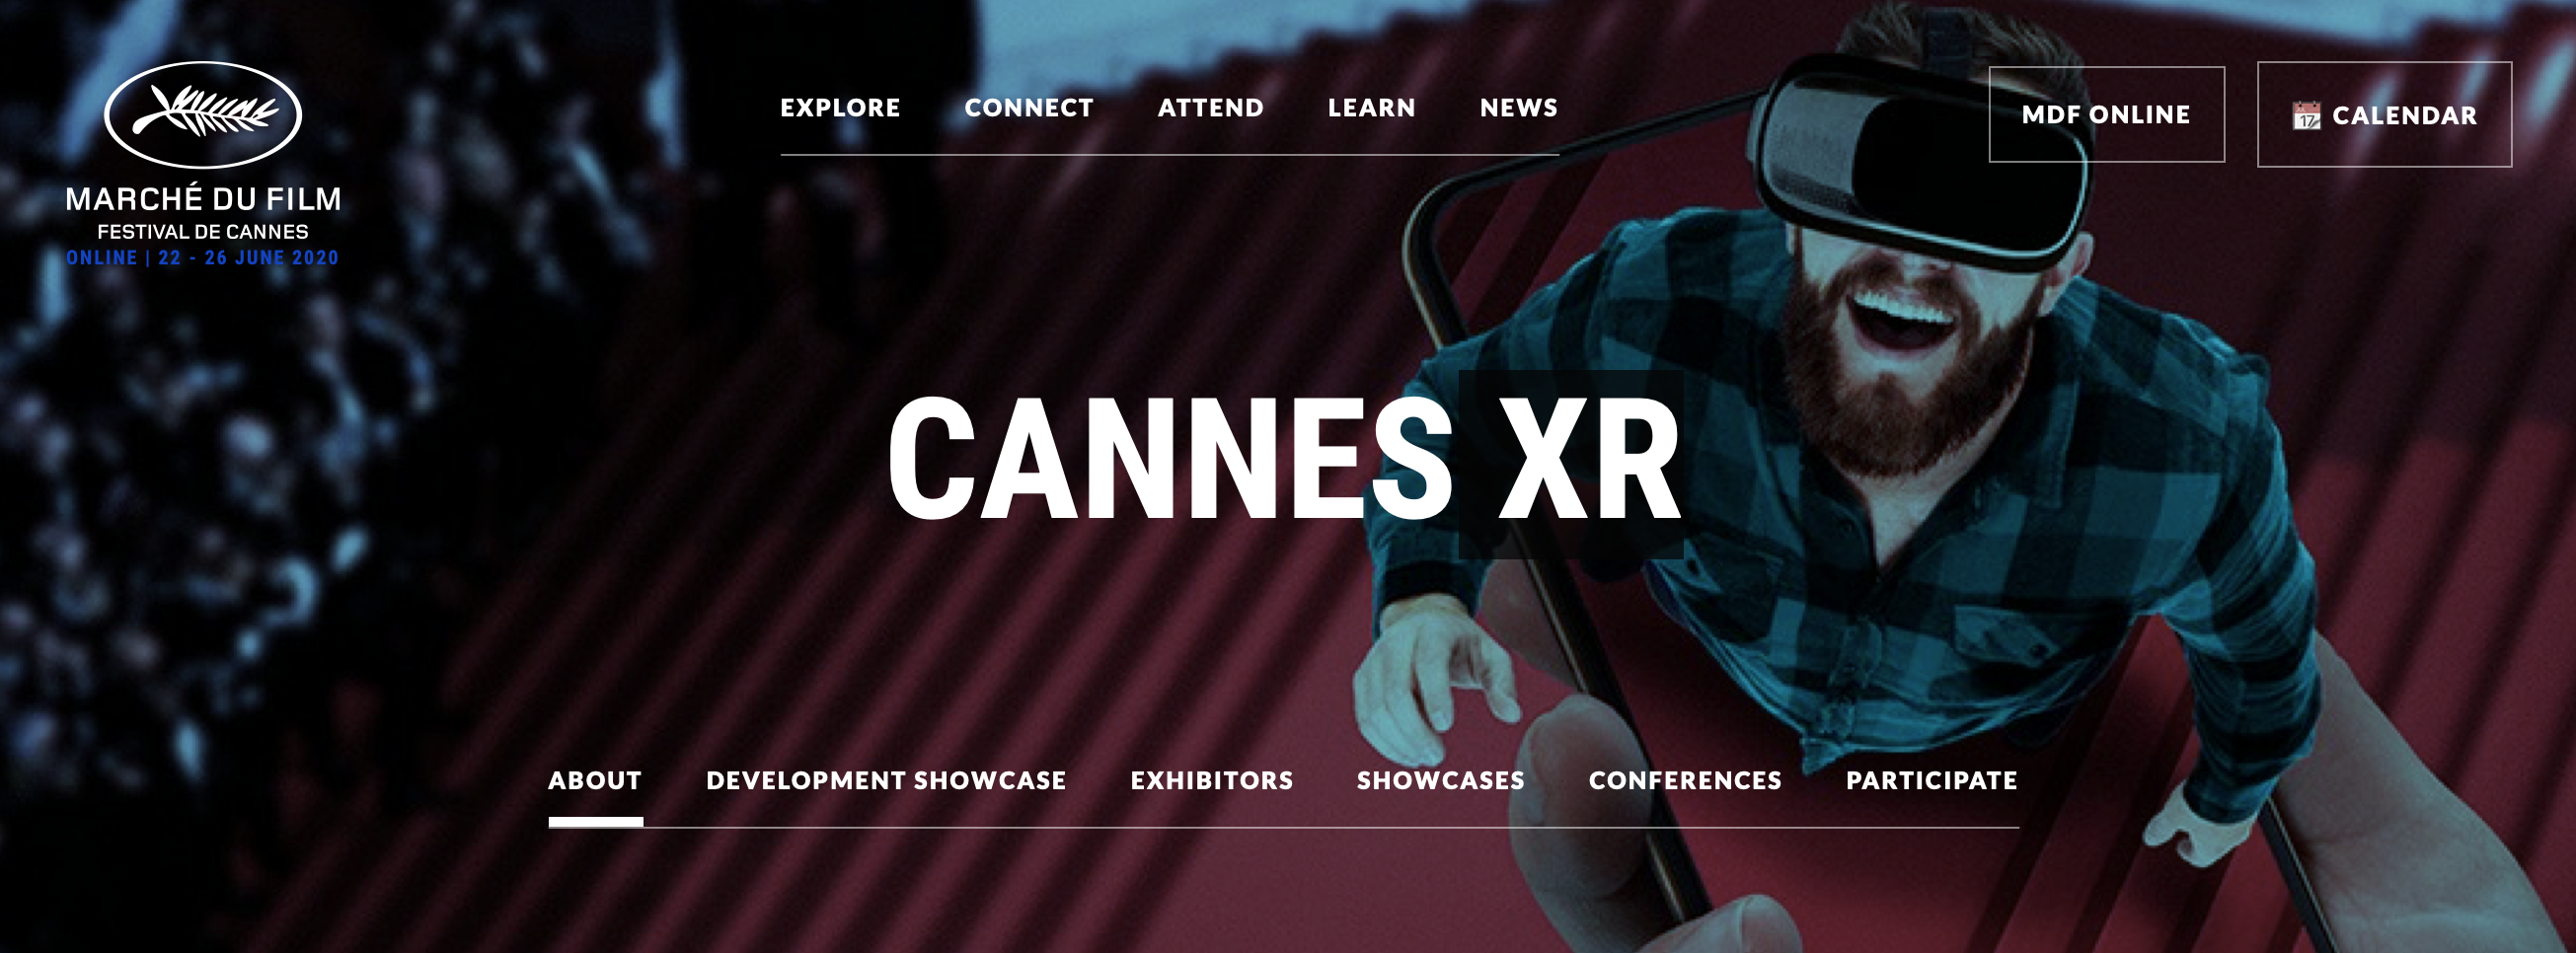 Other Realities博物馆将于6月与戛纳电影节共同举办XR虚拟项目